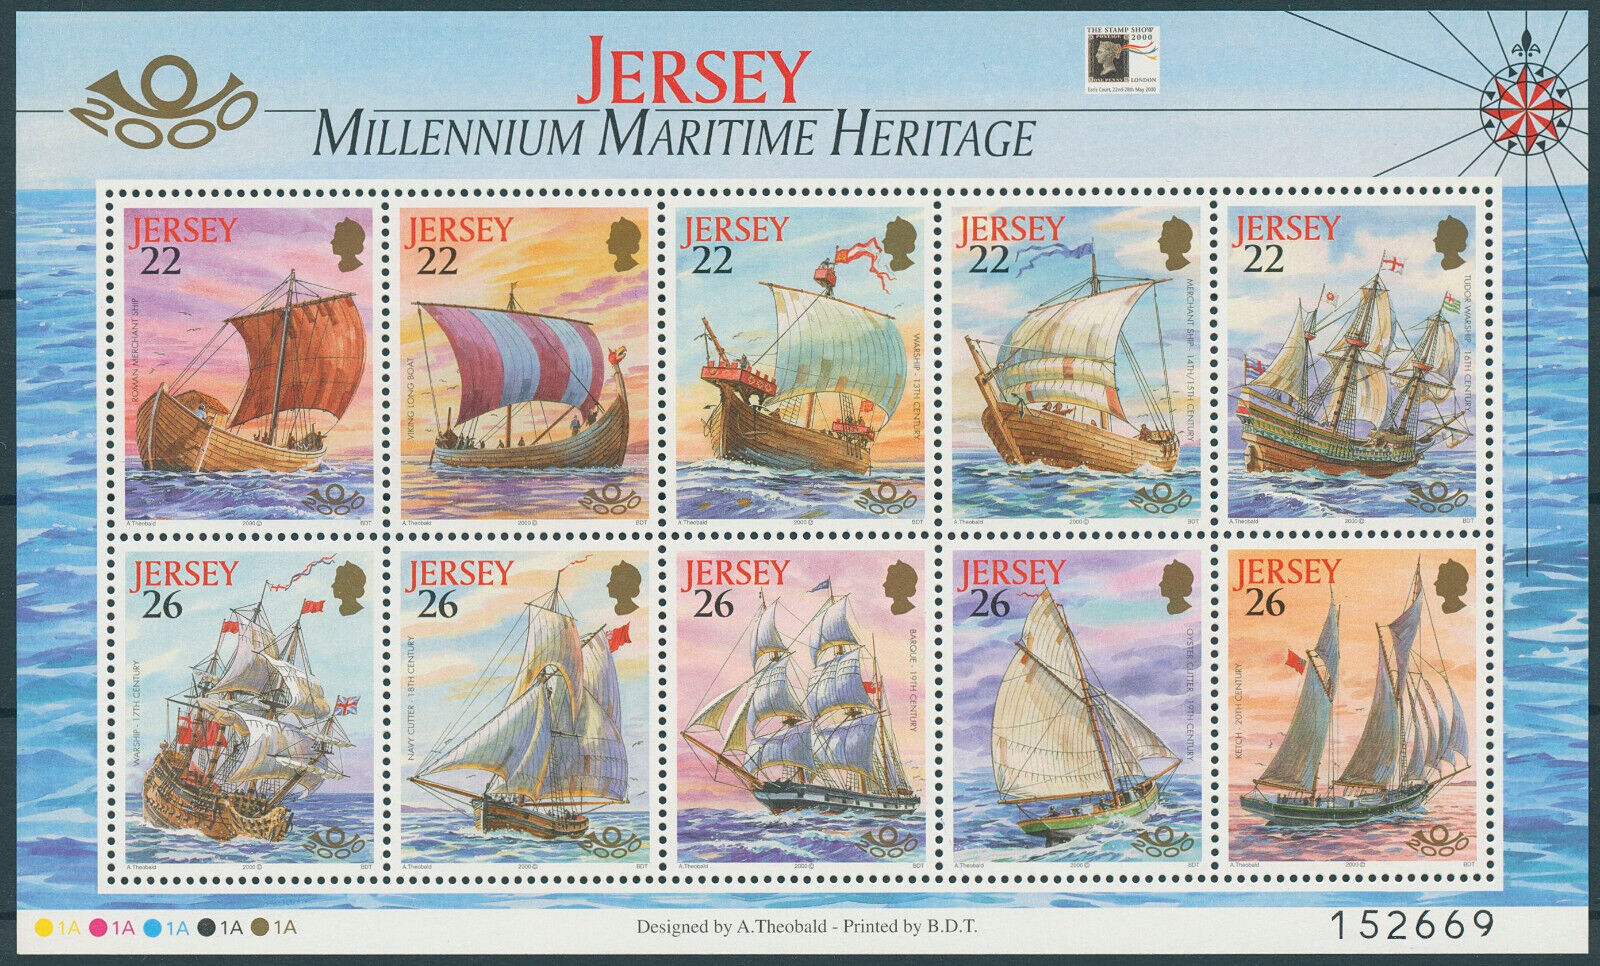 Jersey 2000 MNH Ships Stamps Millennium Maritime Heritage London 2000 10v M/S